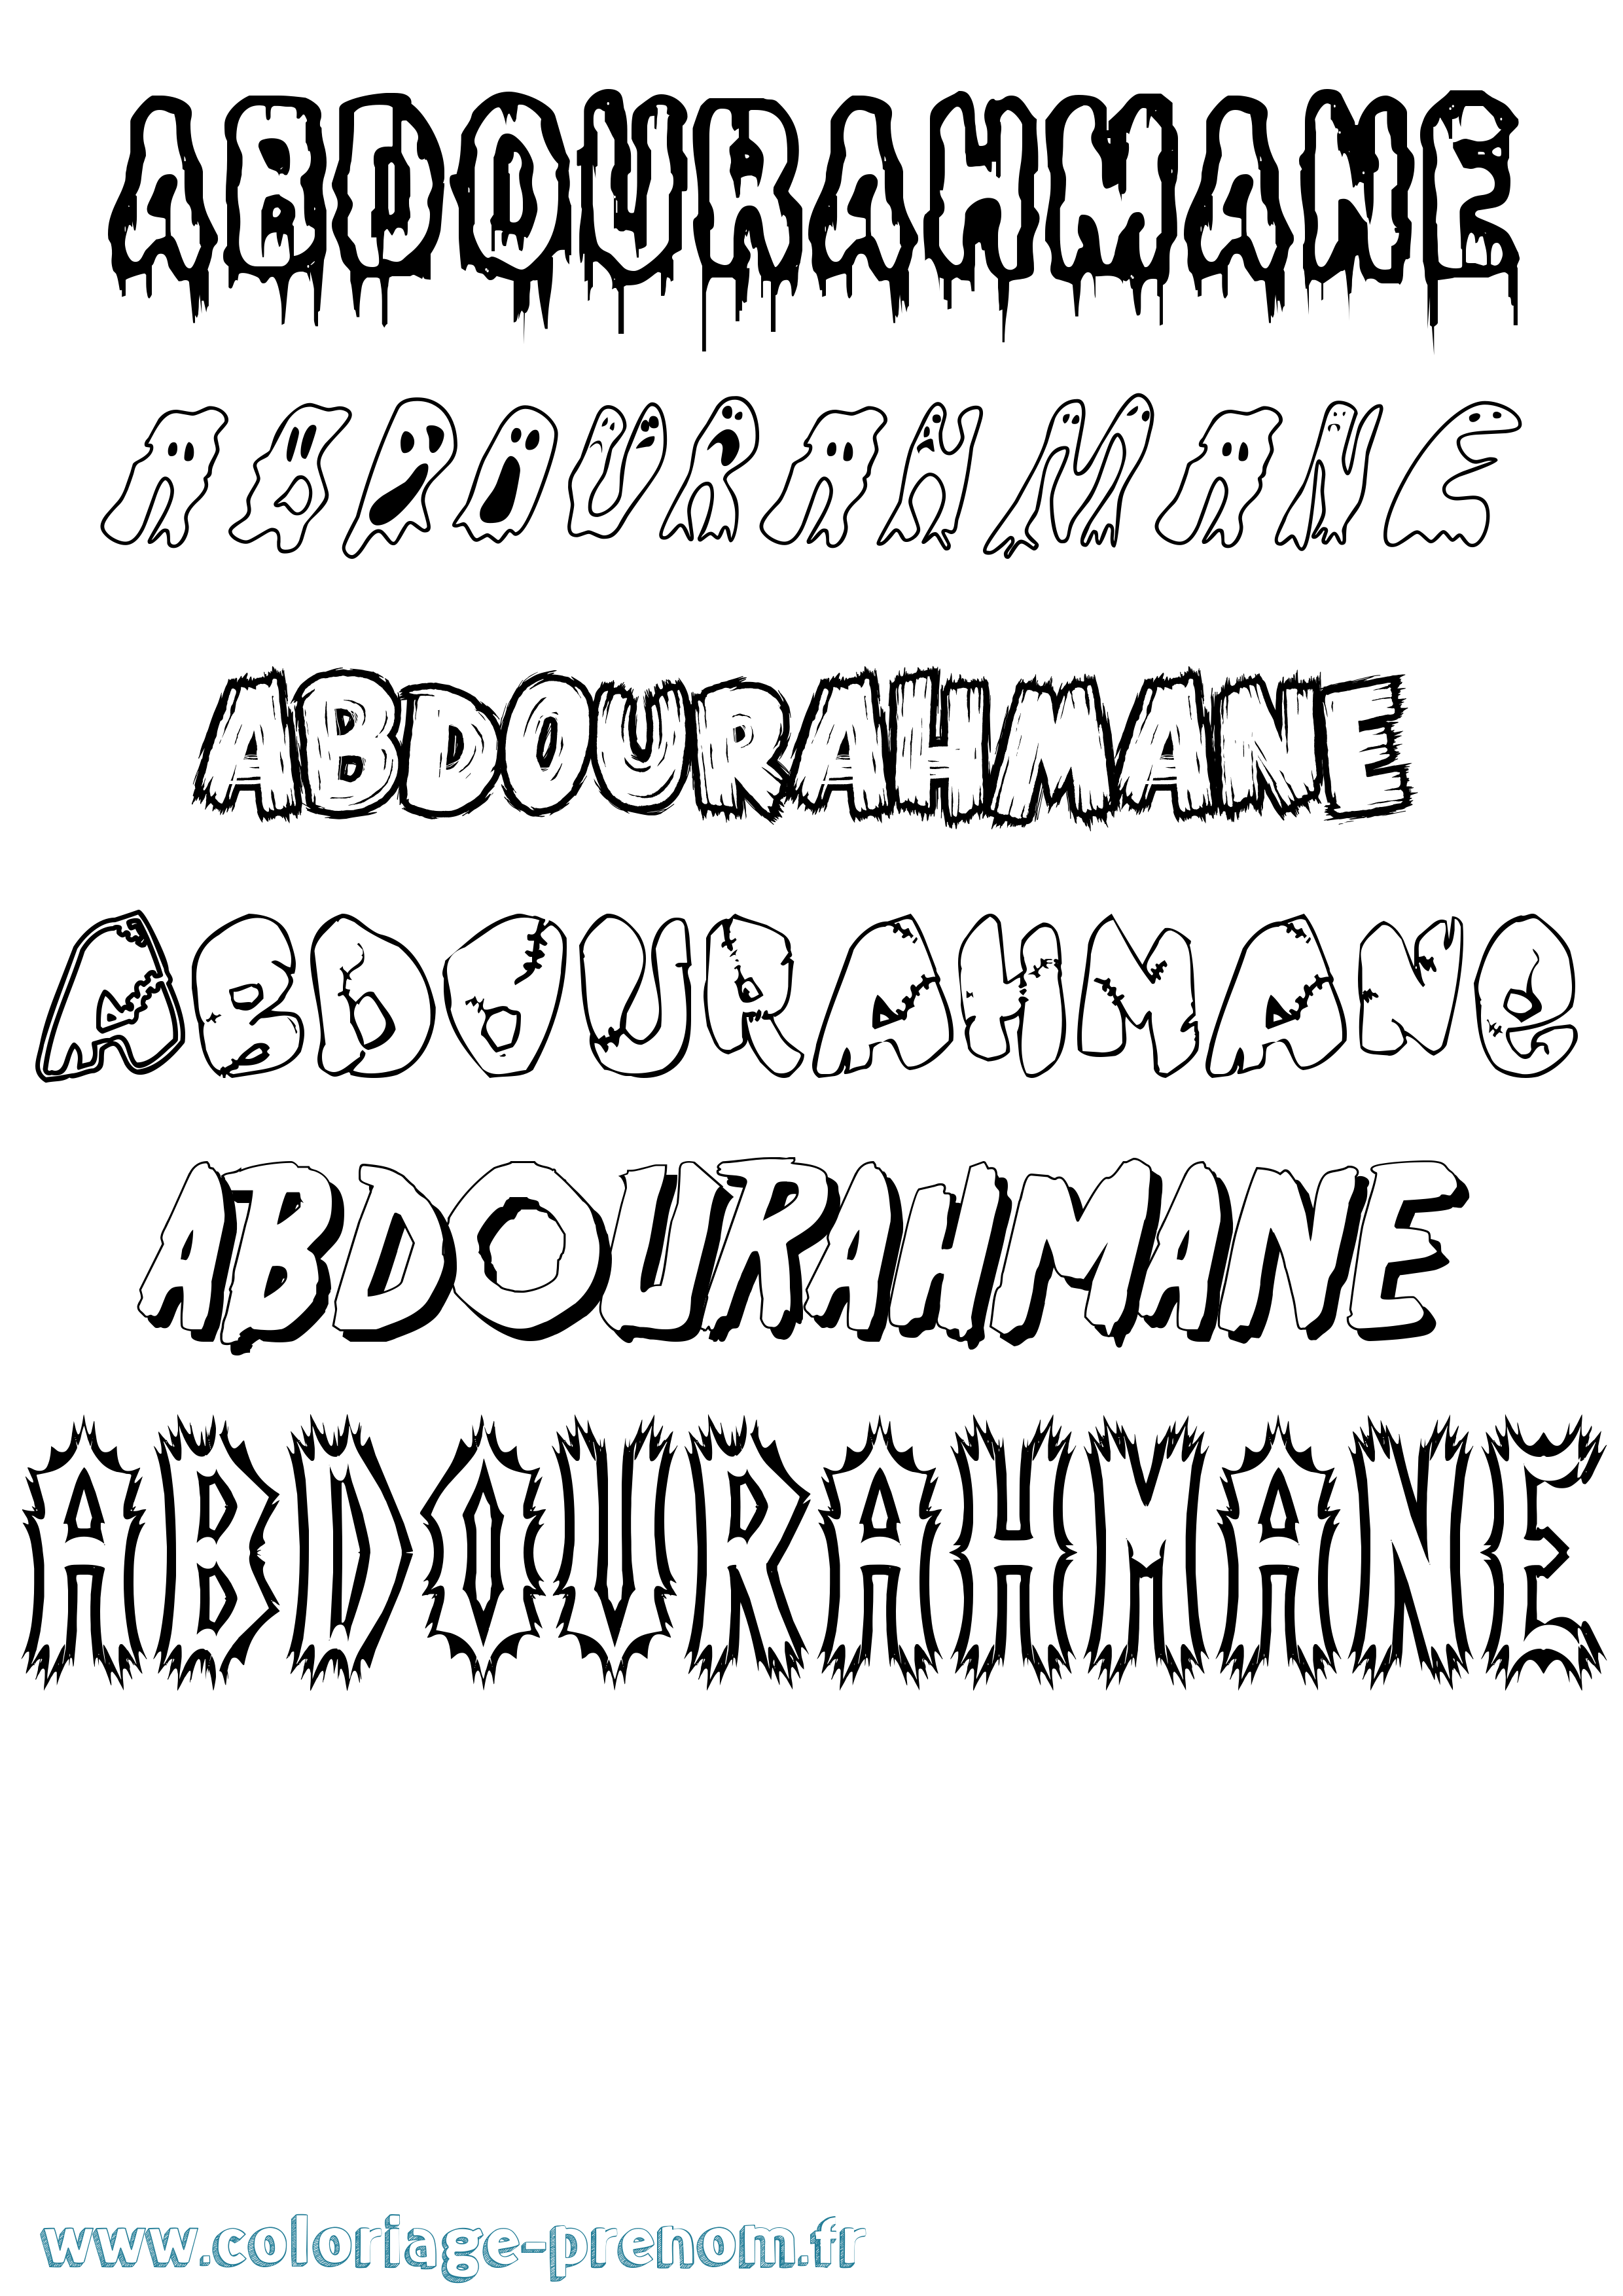 Coloriage prénom Abdourahmane